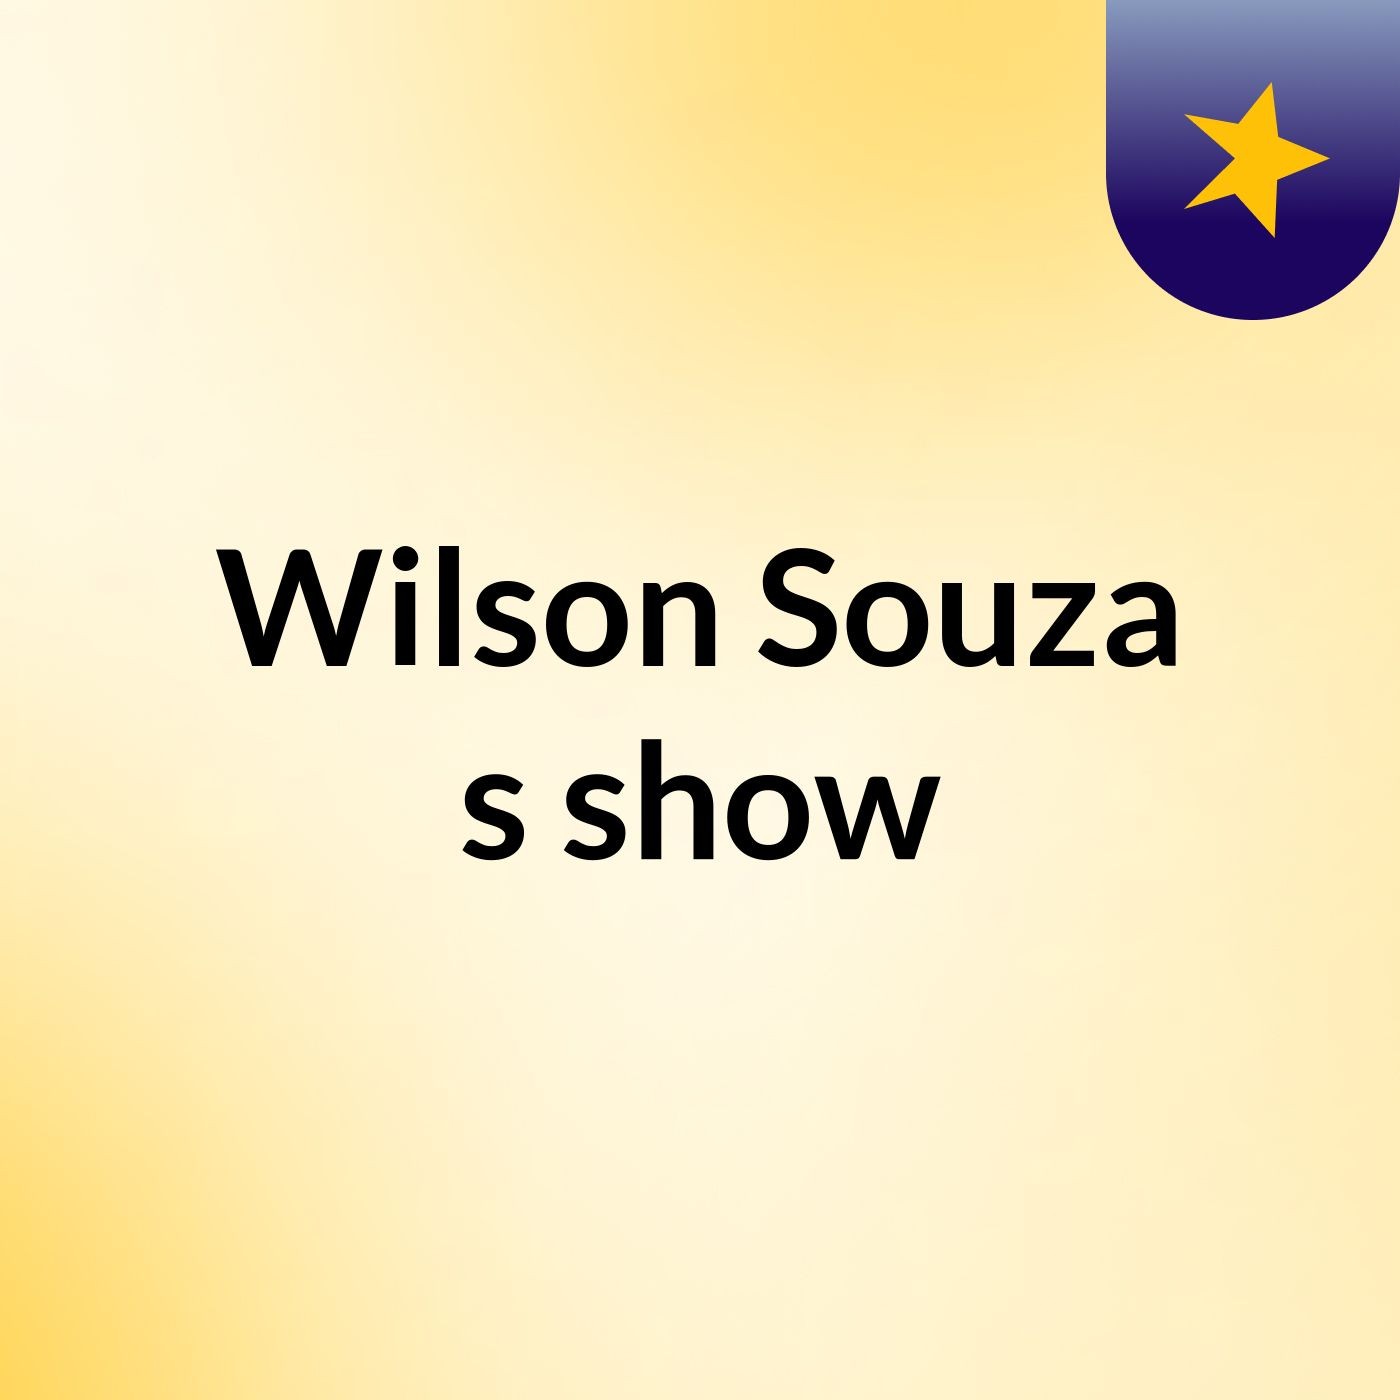 Wilson Souza's show